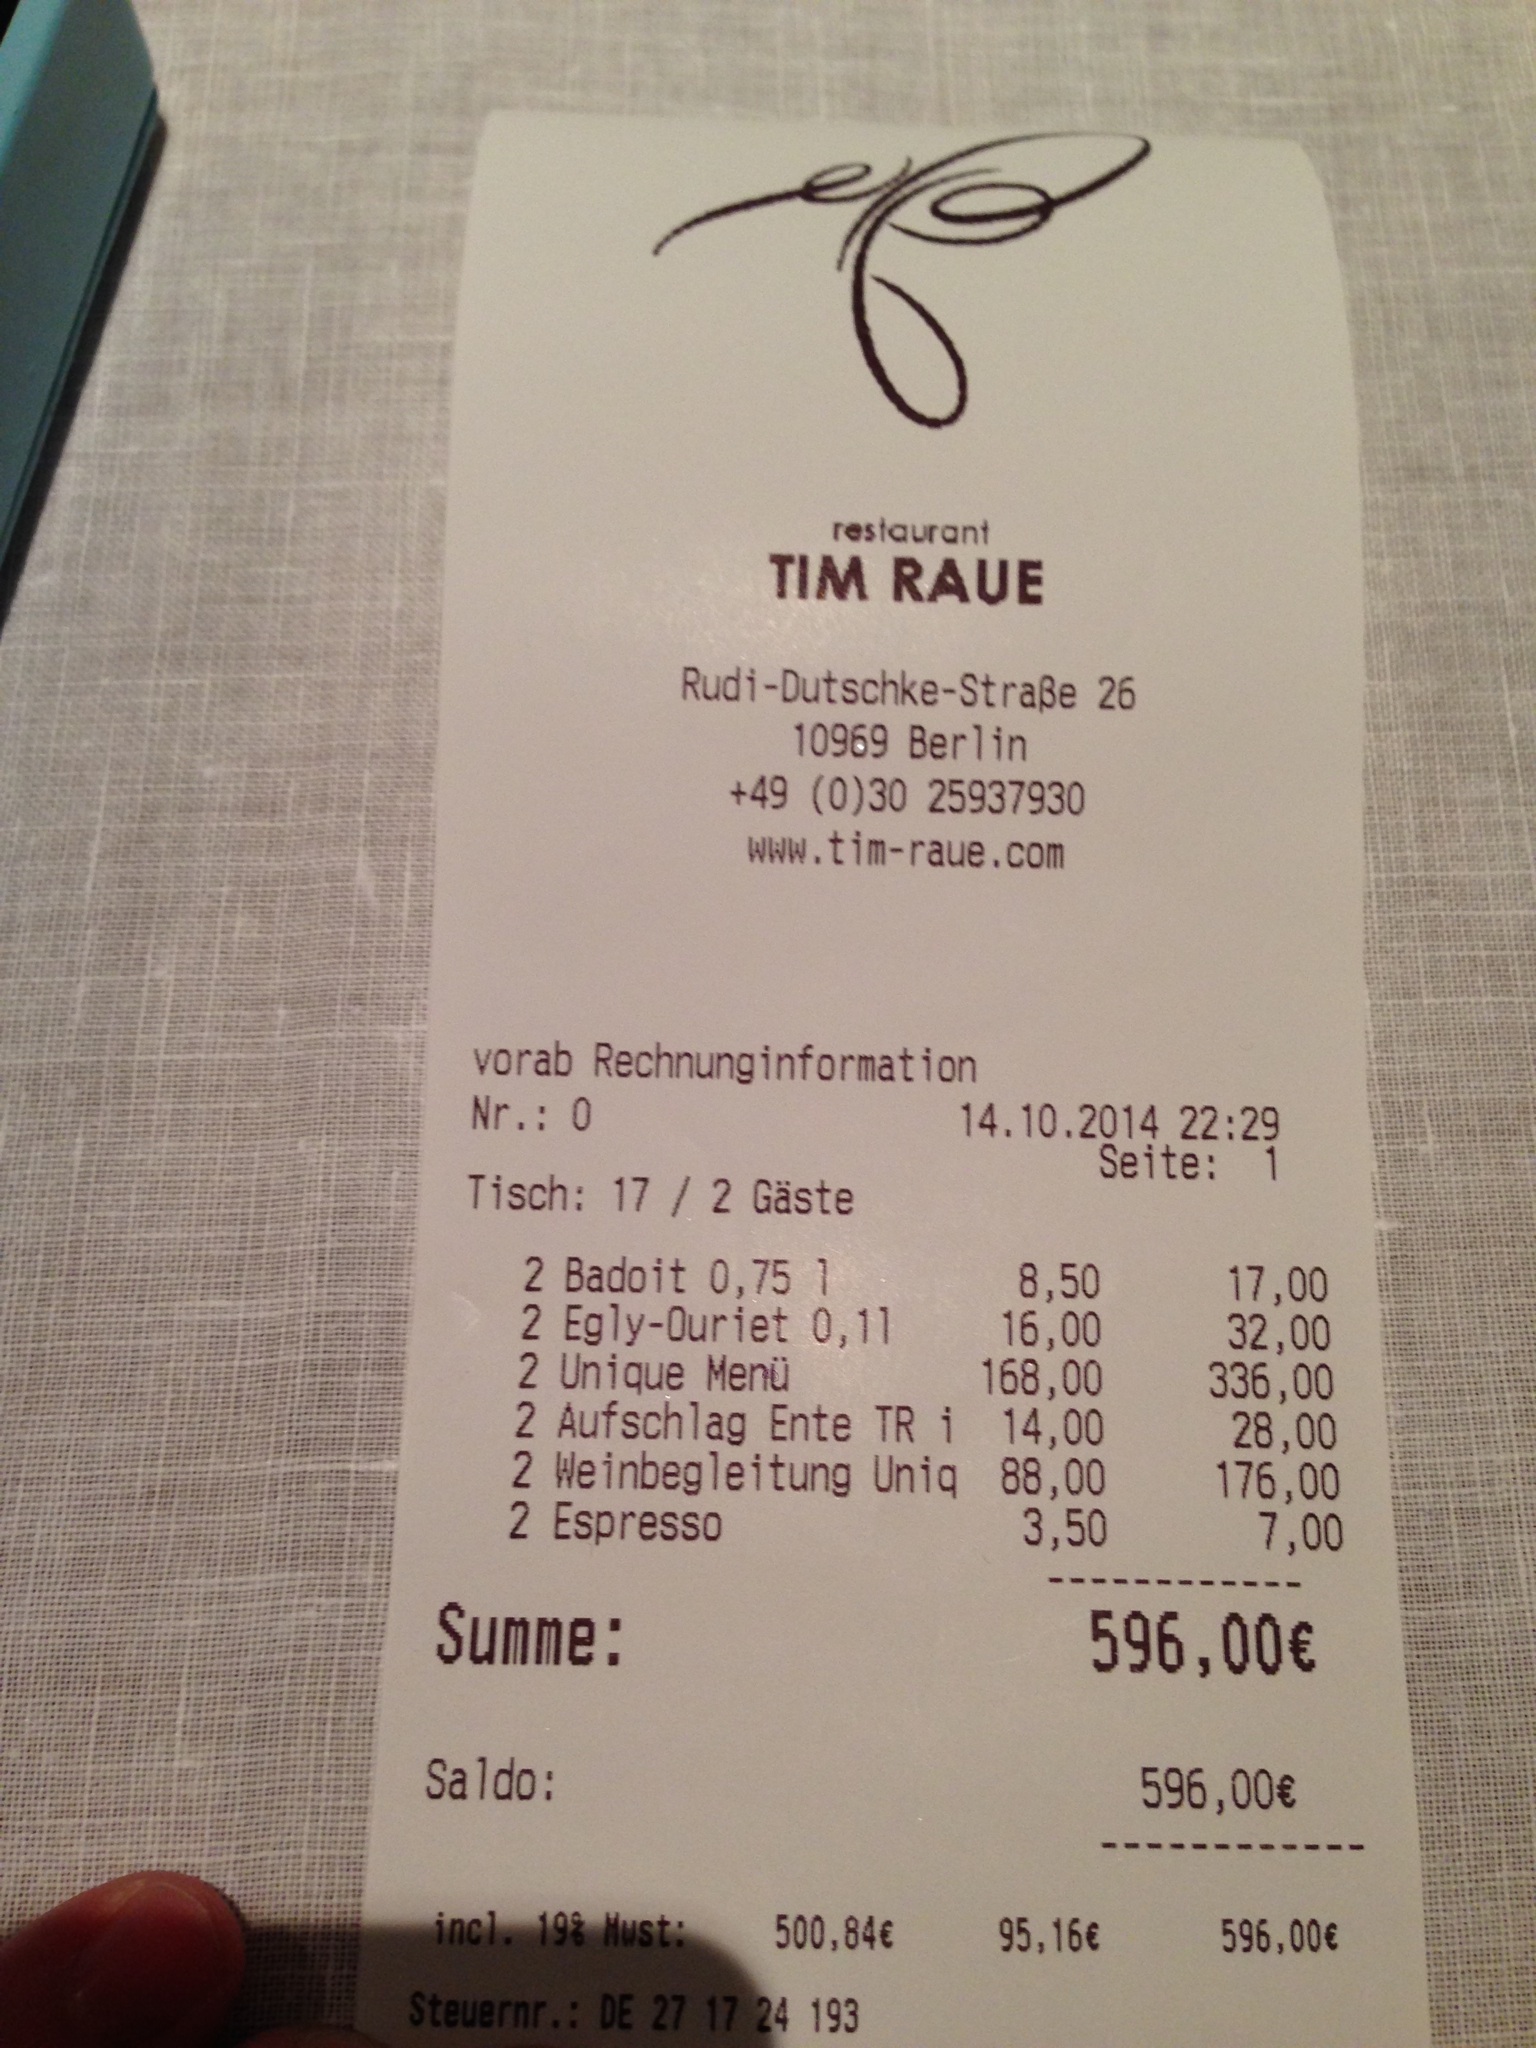 Tim Raue, Rudi Dutschke Strasse, Berlin | | The real picky gourmet